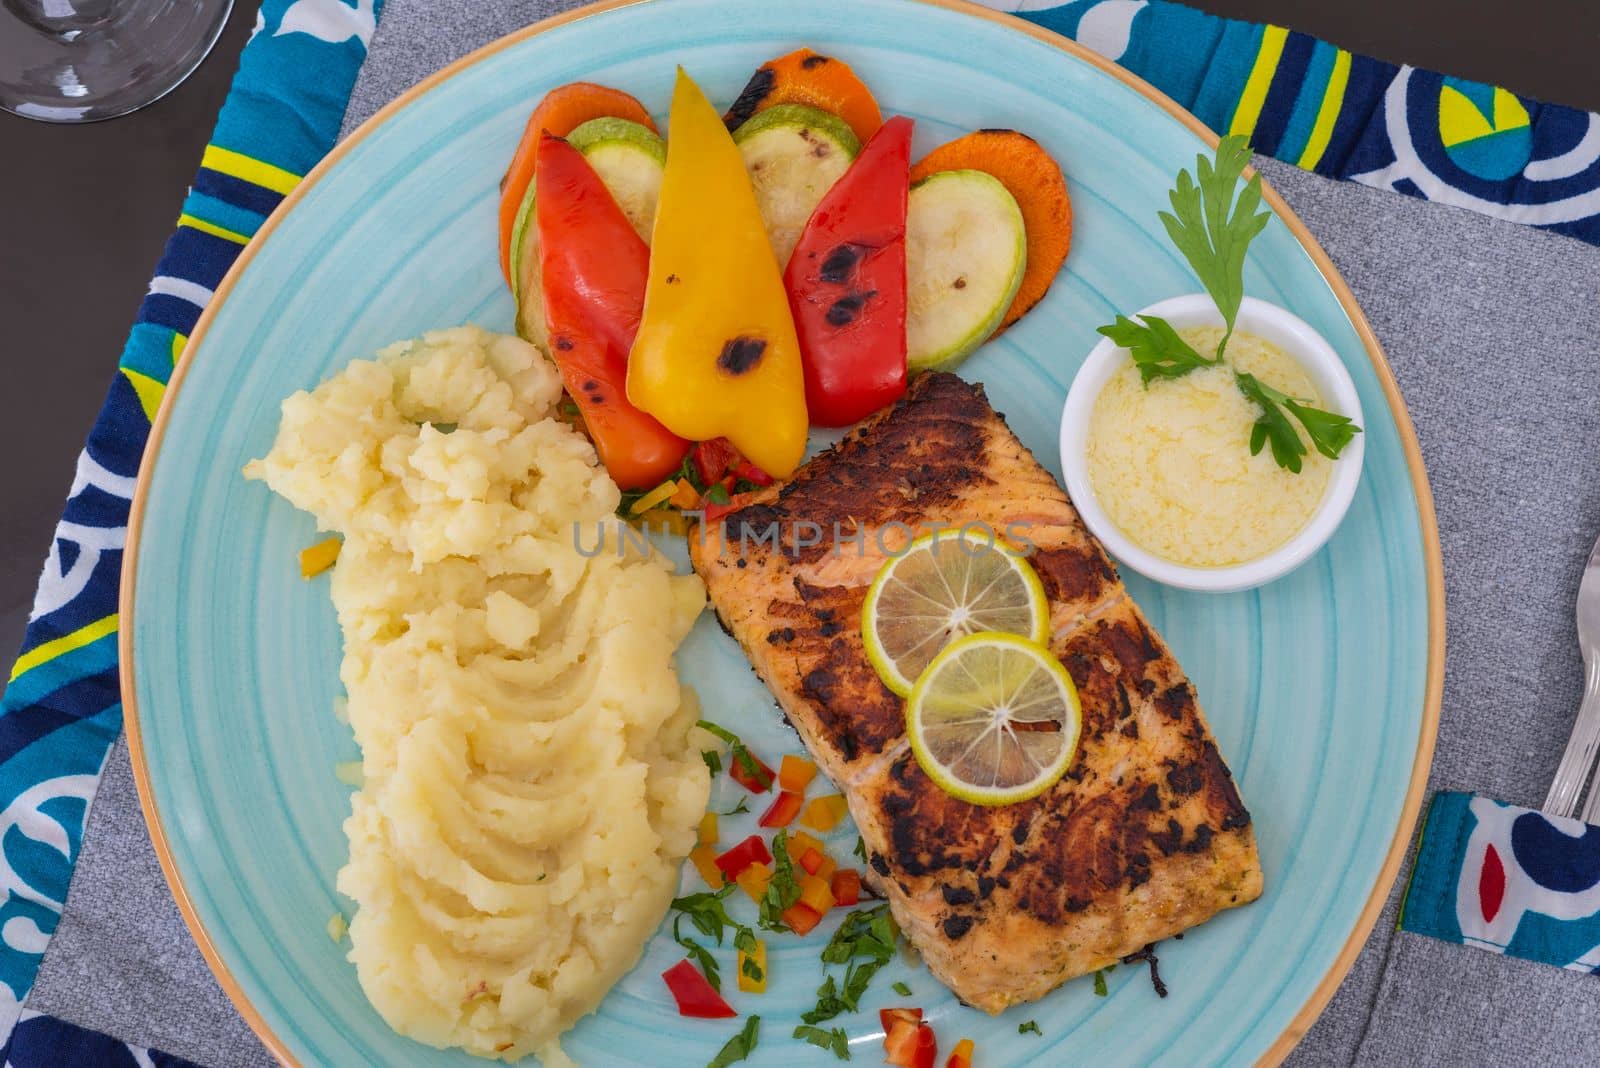 Salmon steak a la carte meal with vegetables by paulvinten